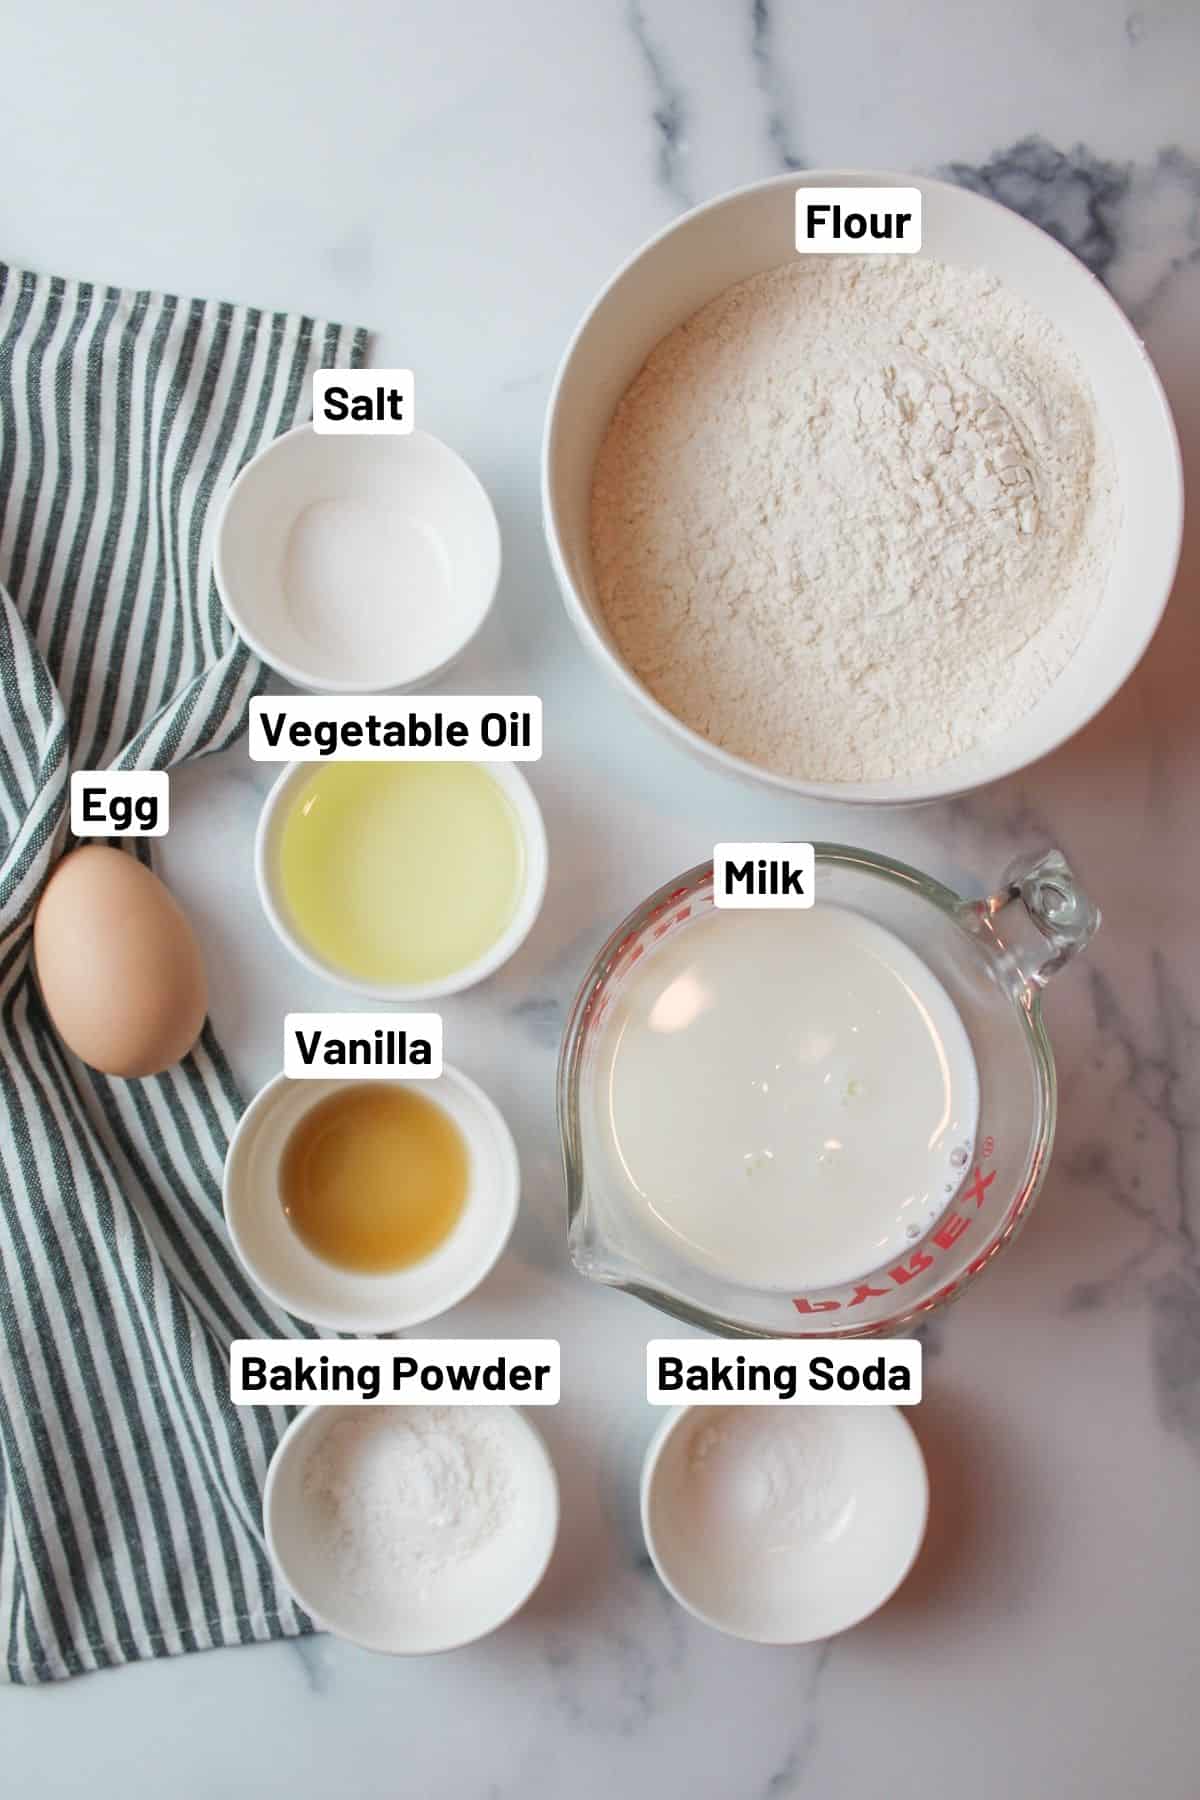 labeled ingredients needed to make sugar free pancakes